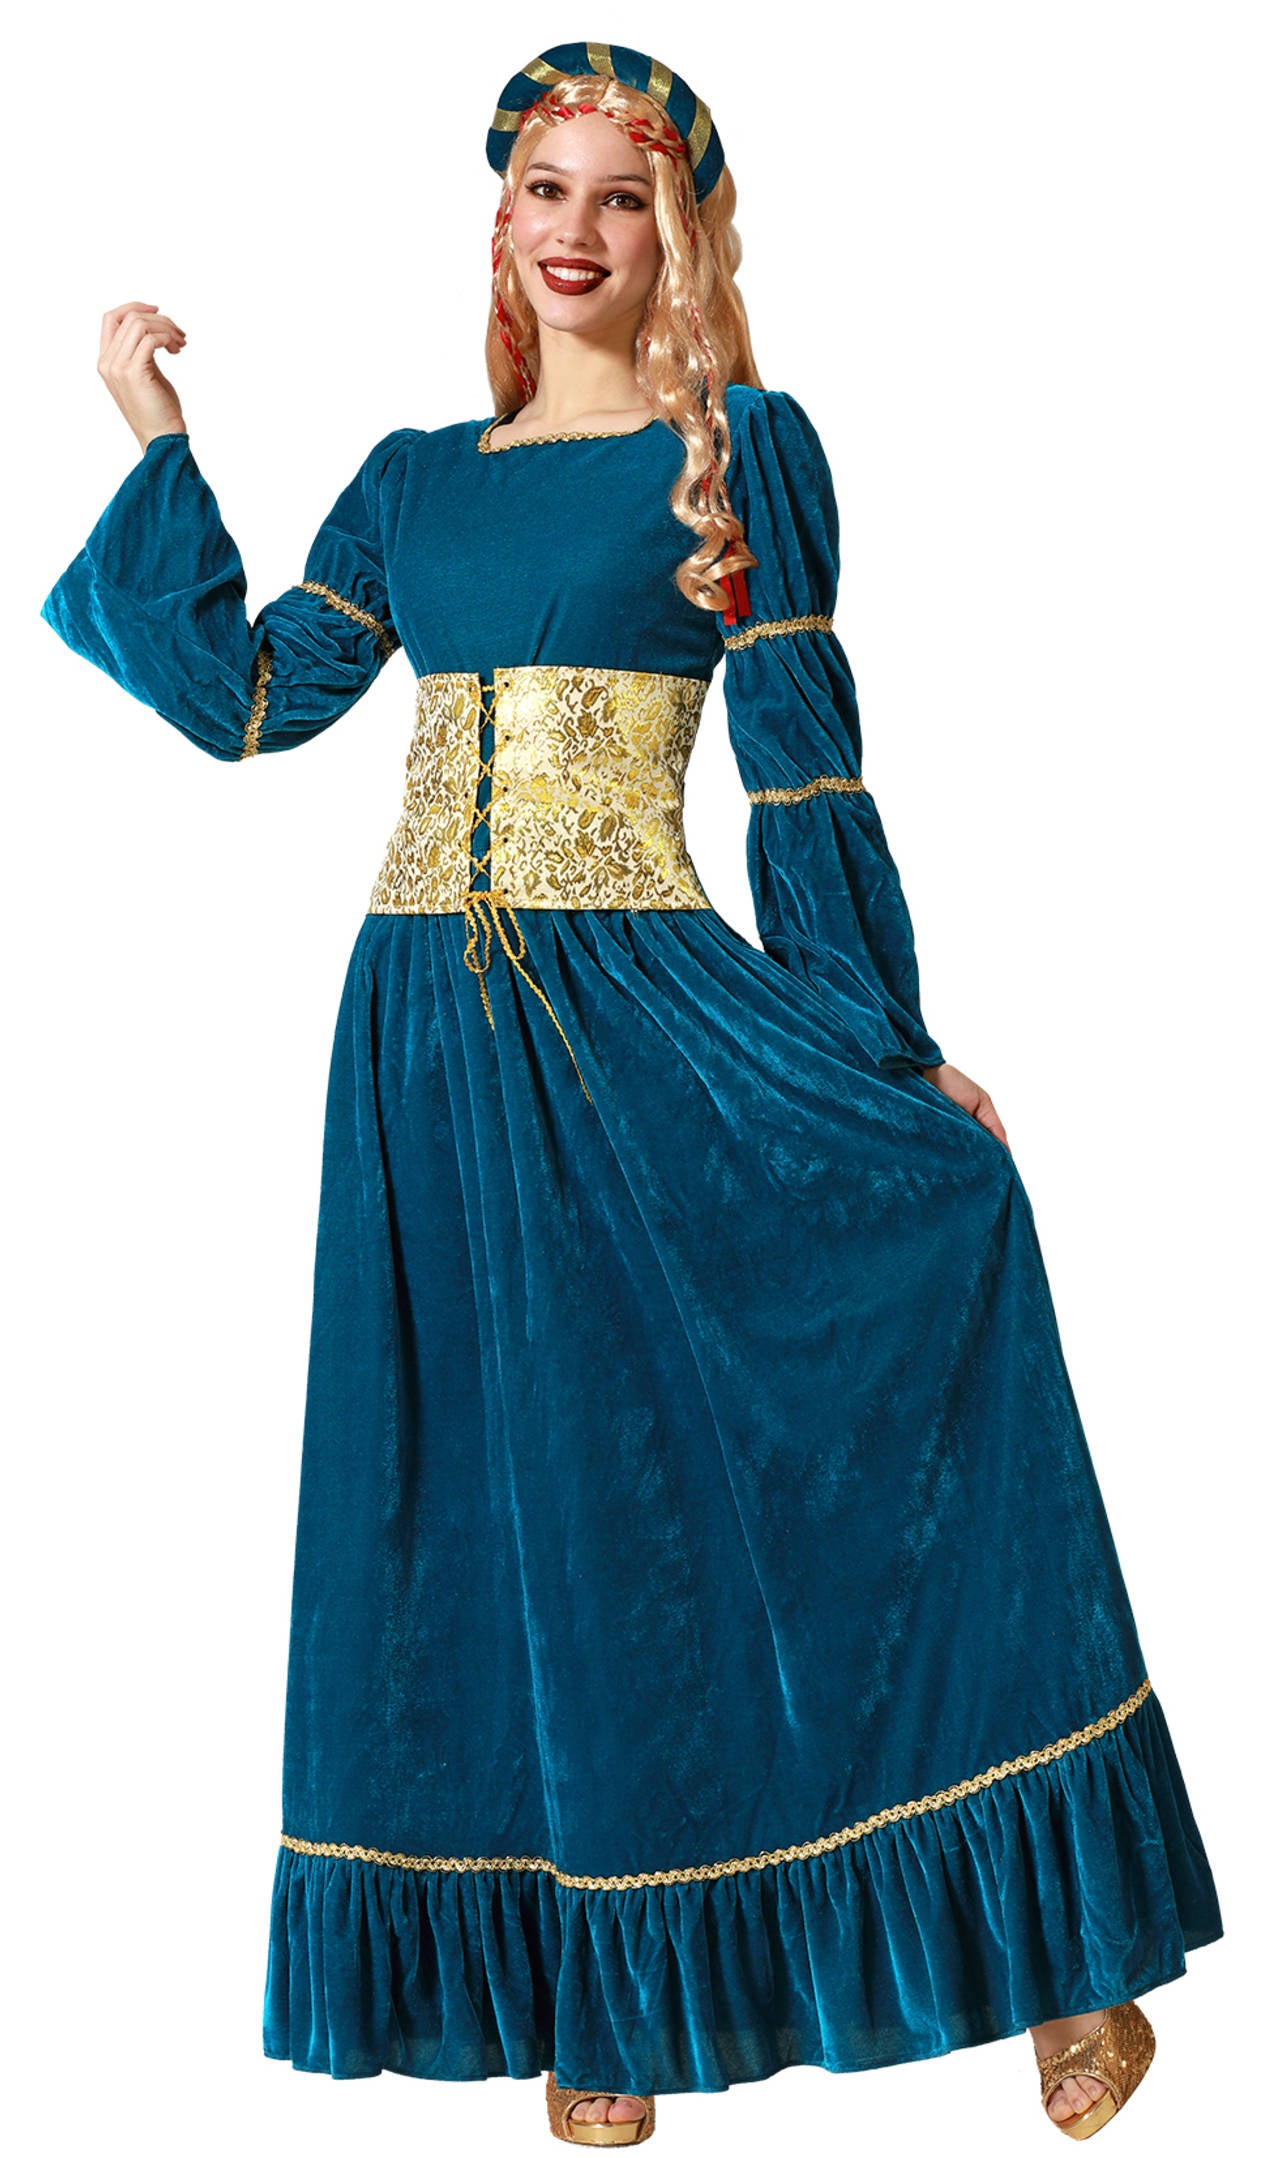 Disfraz vestido princesa medieval mujer